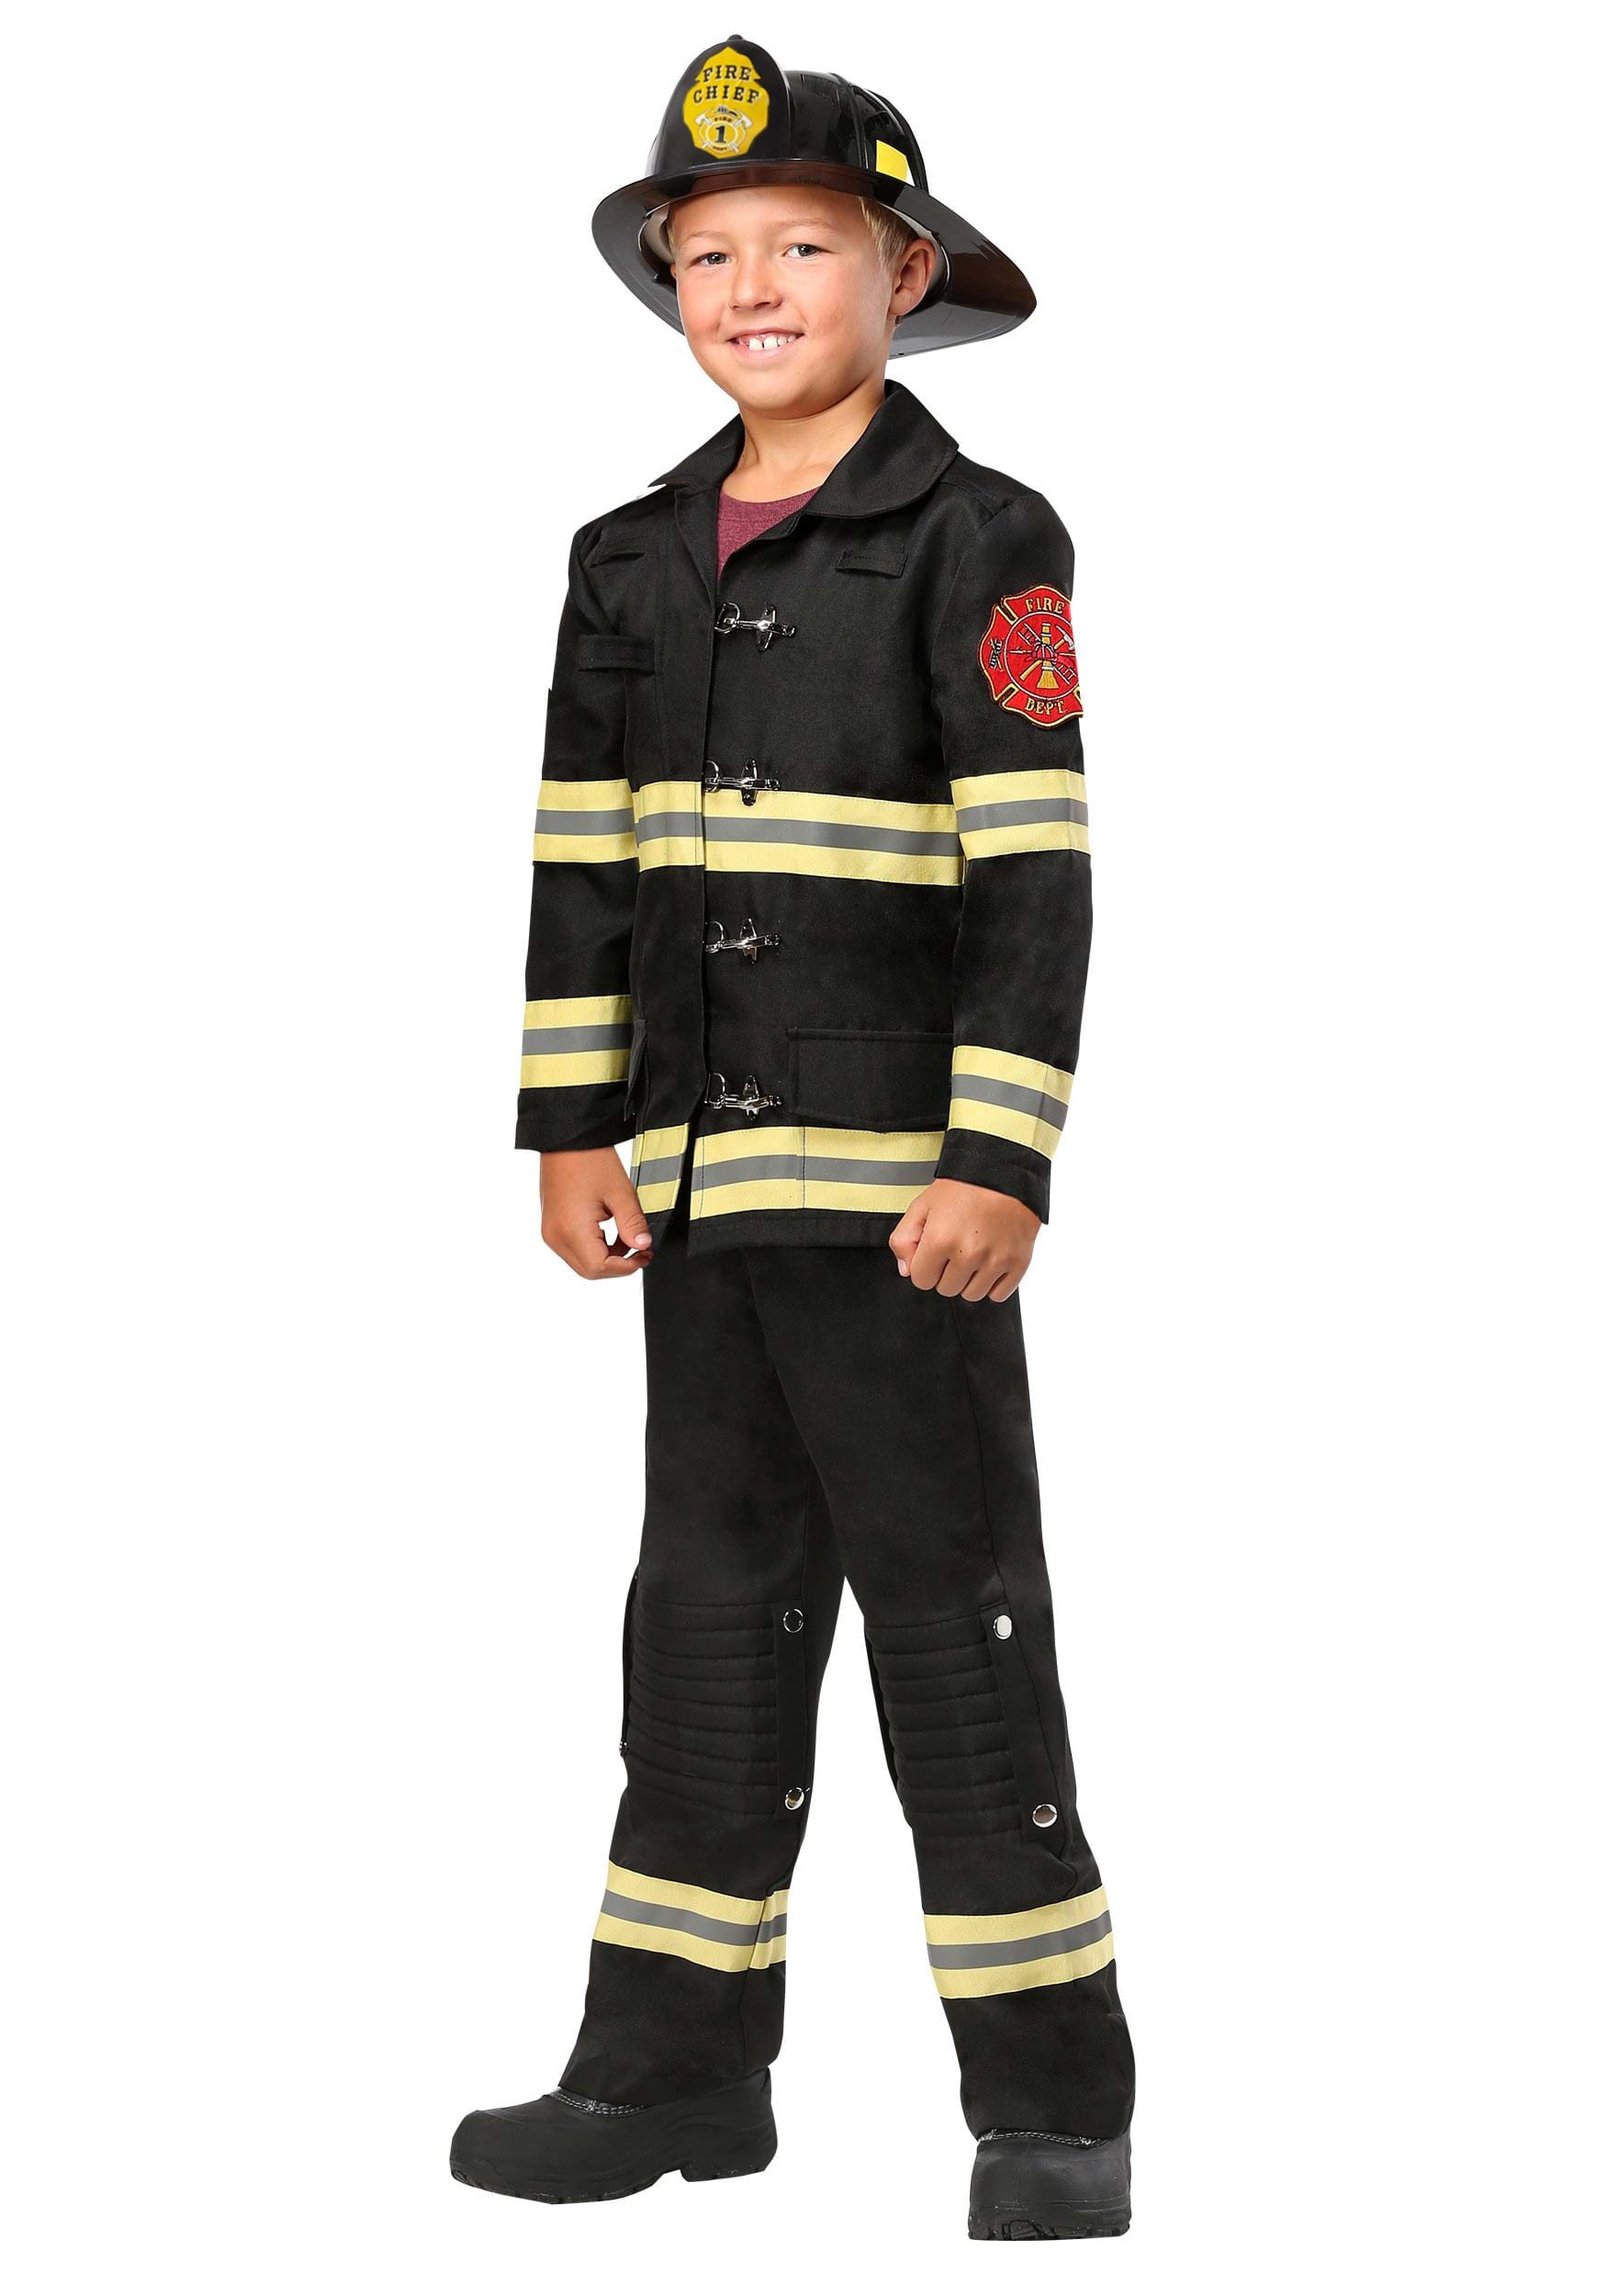 Black Uniform Firefighter Costume for Kids